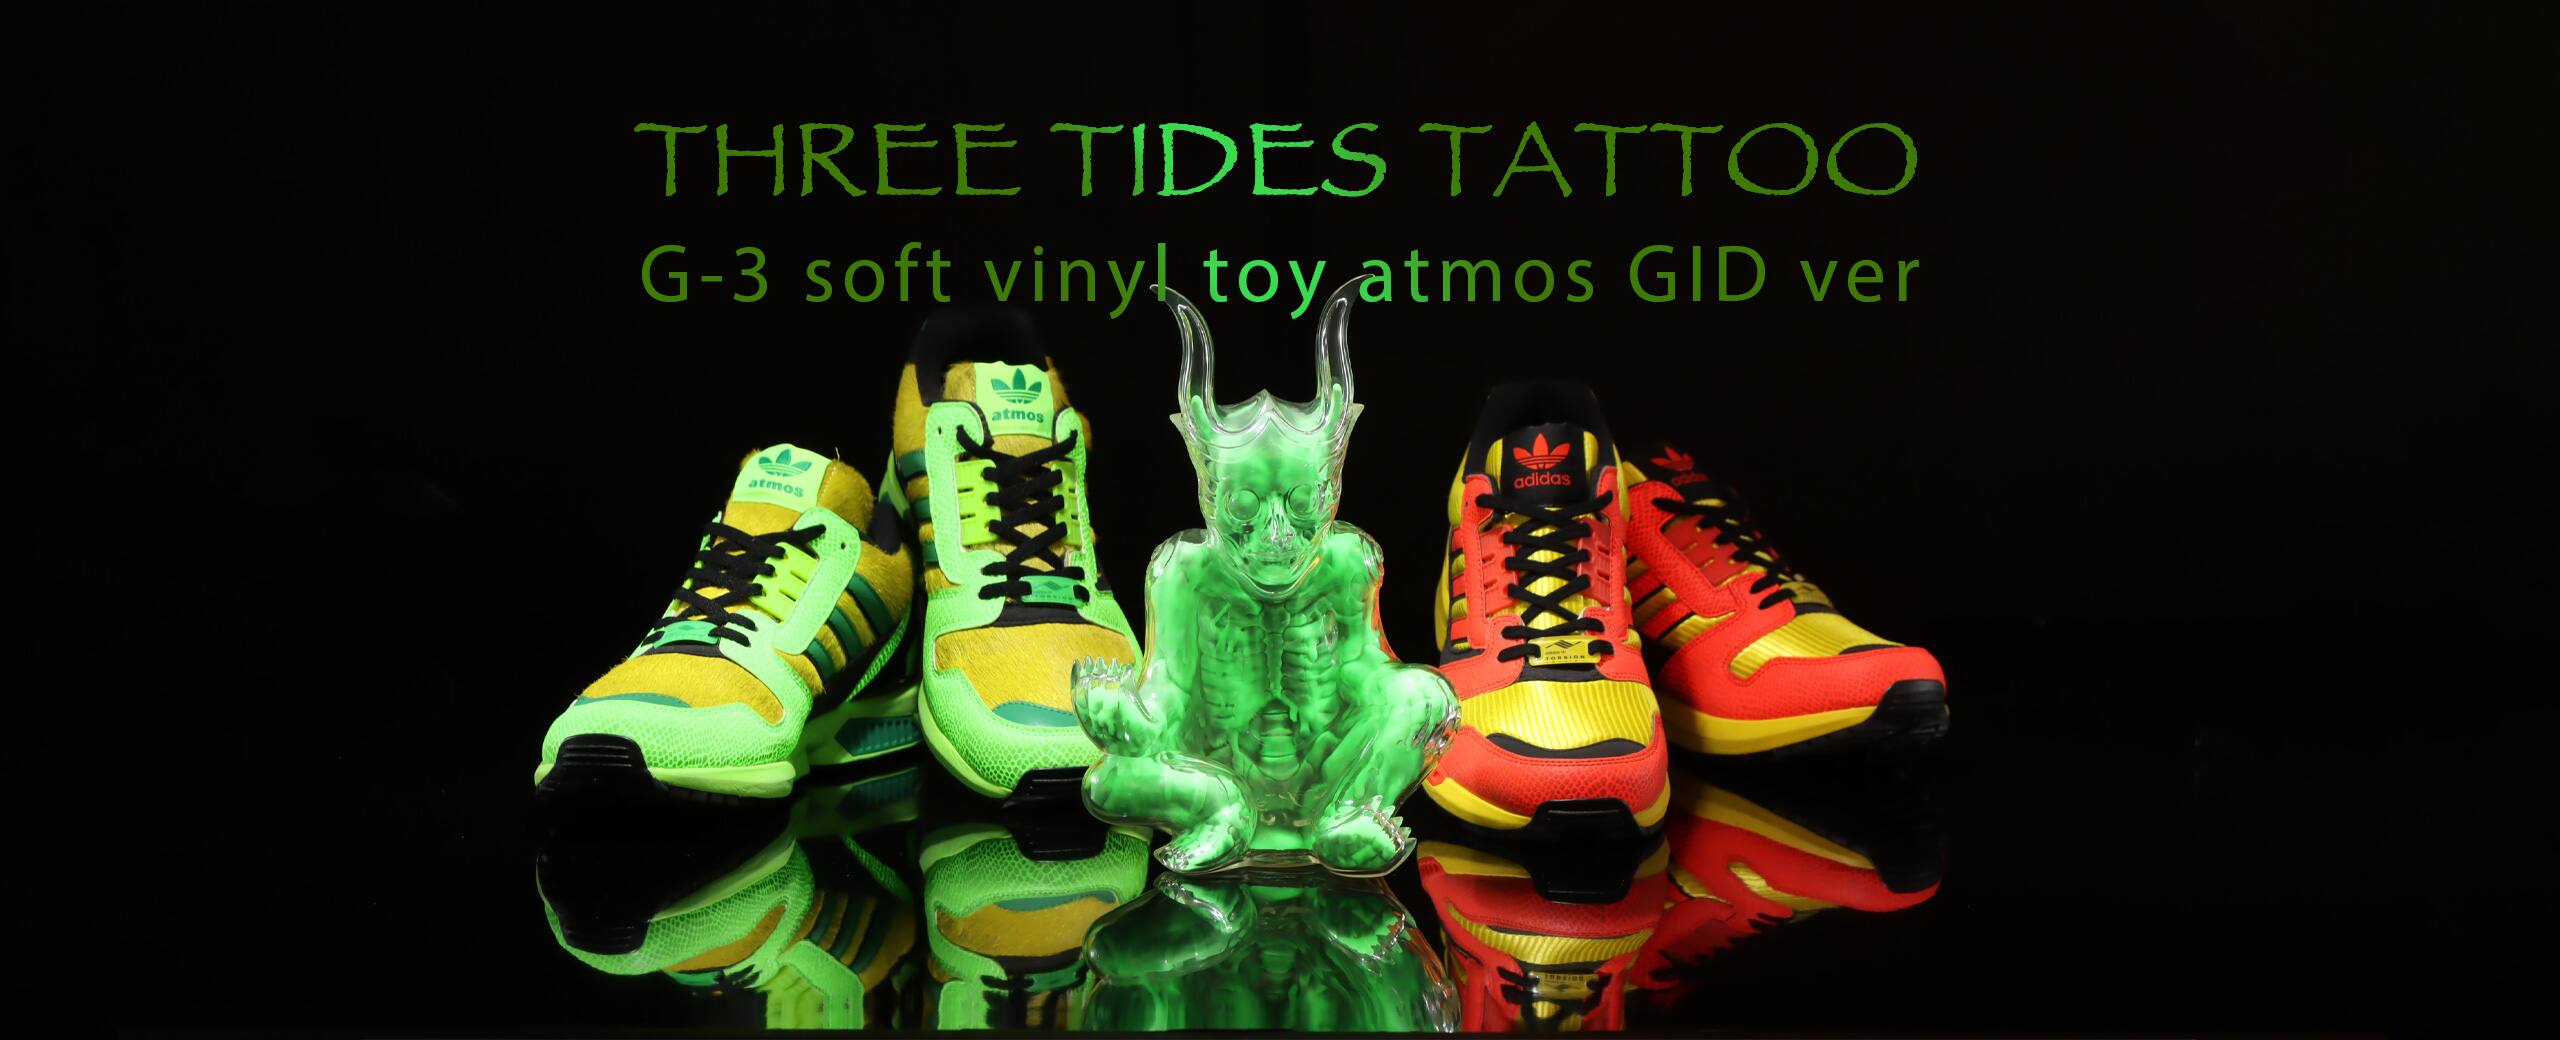 "THREE TIDES TATTOO G-3 soft vinyl toy atmos GID ver"